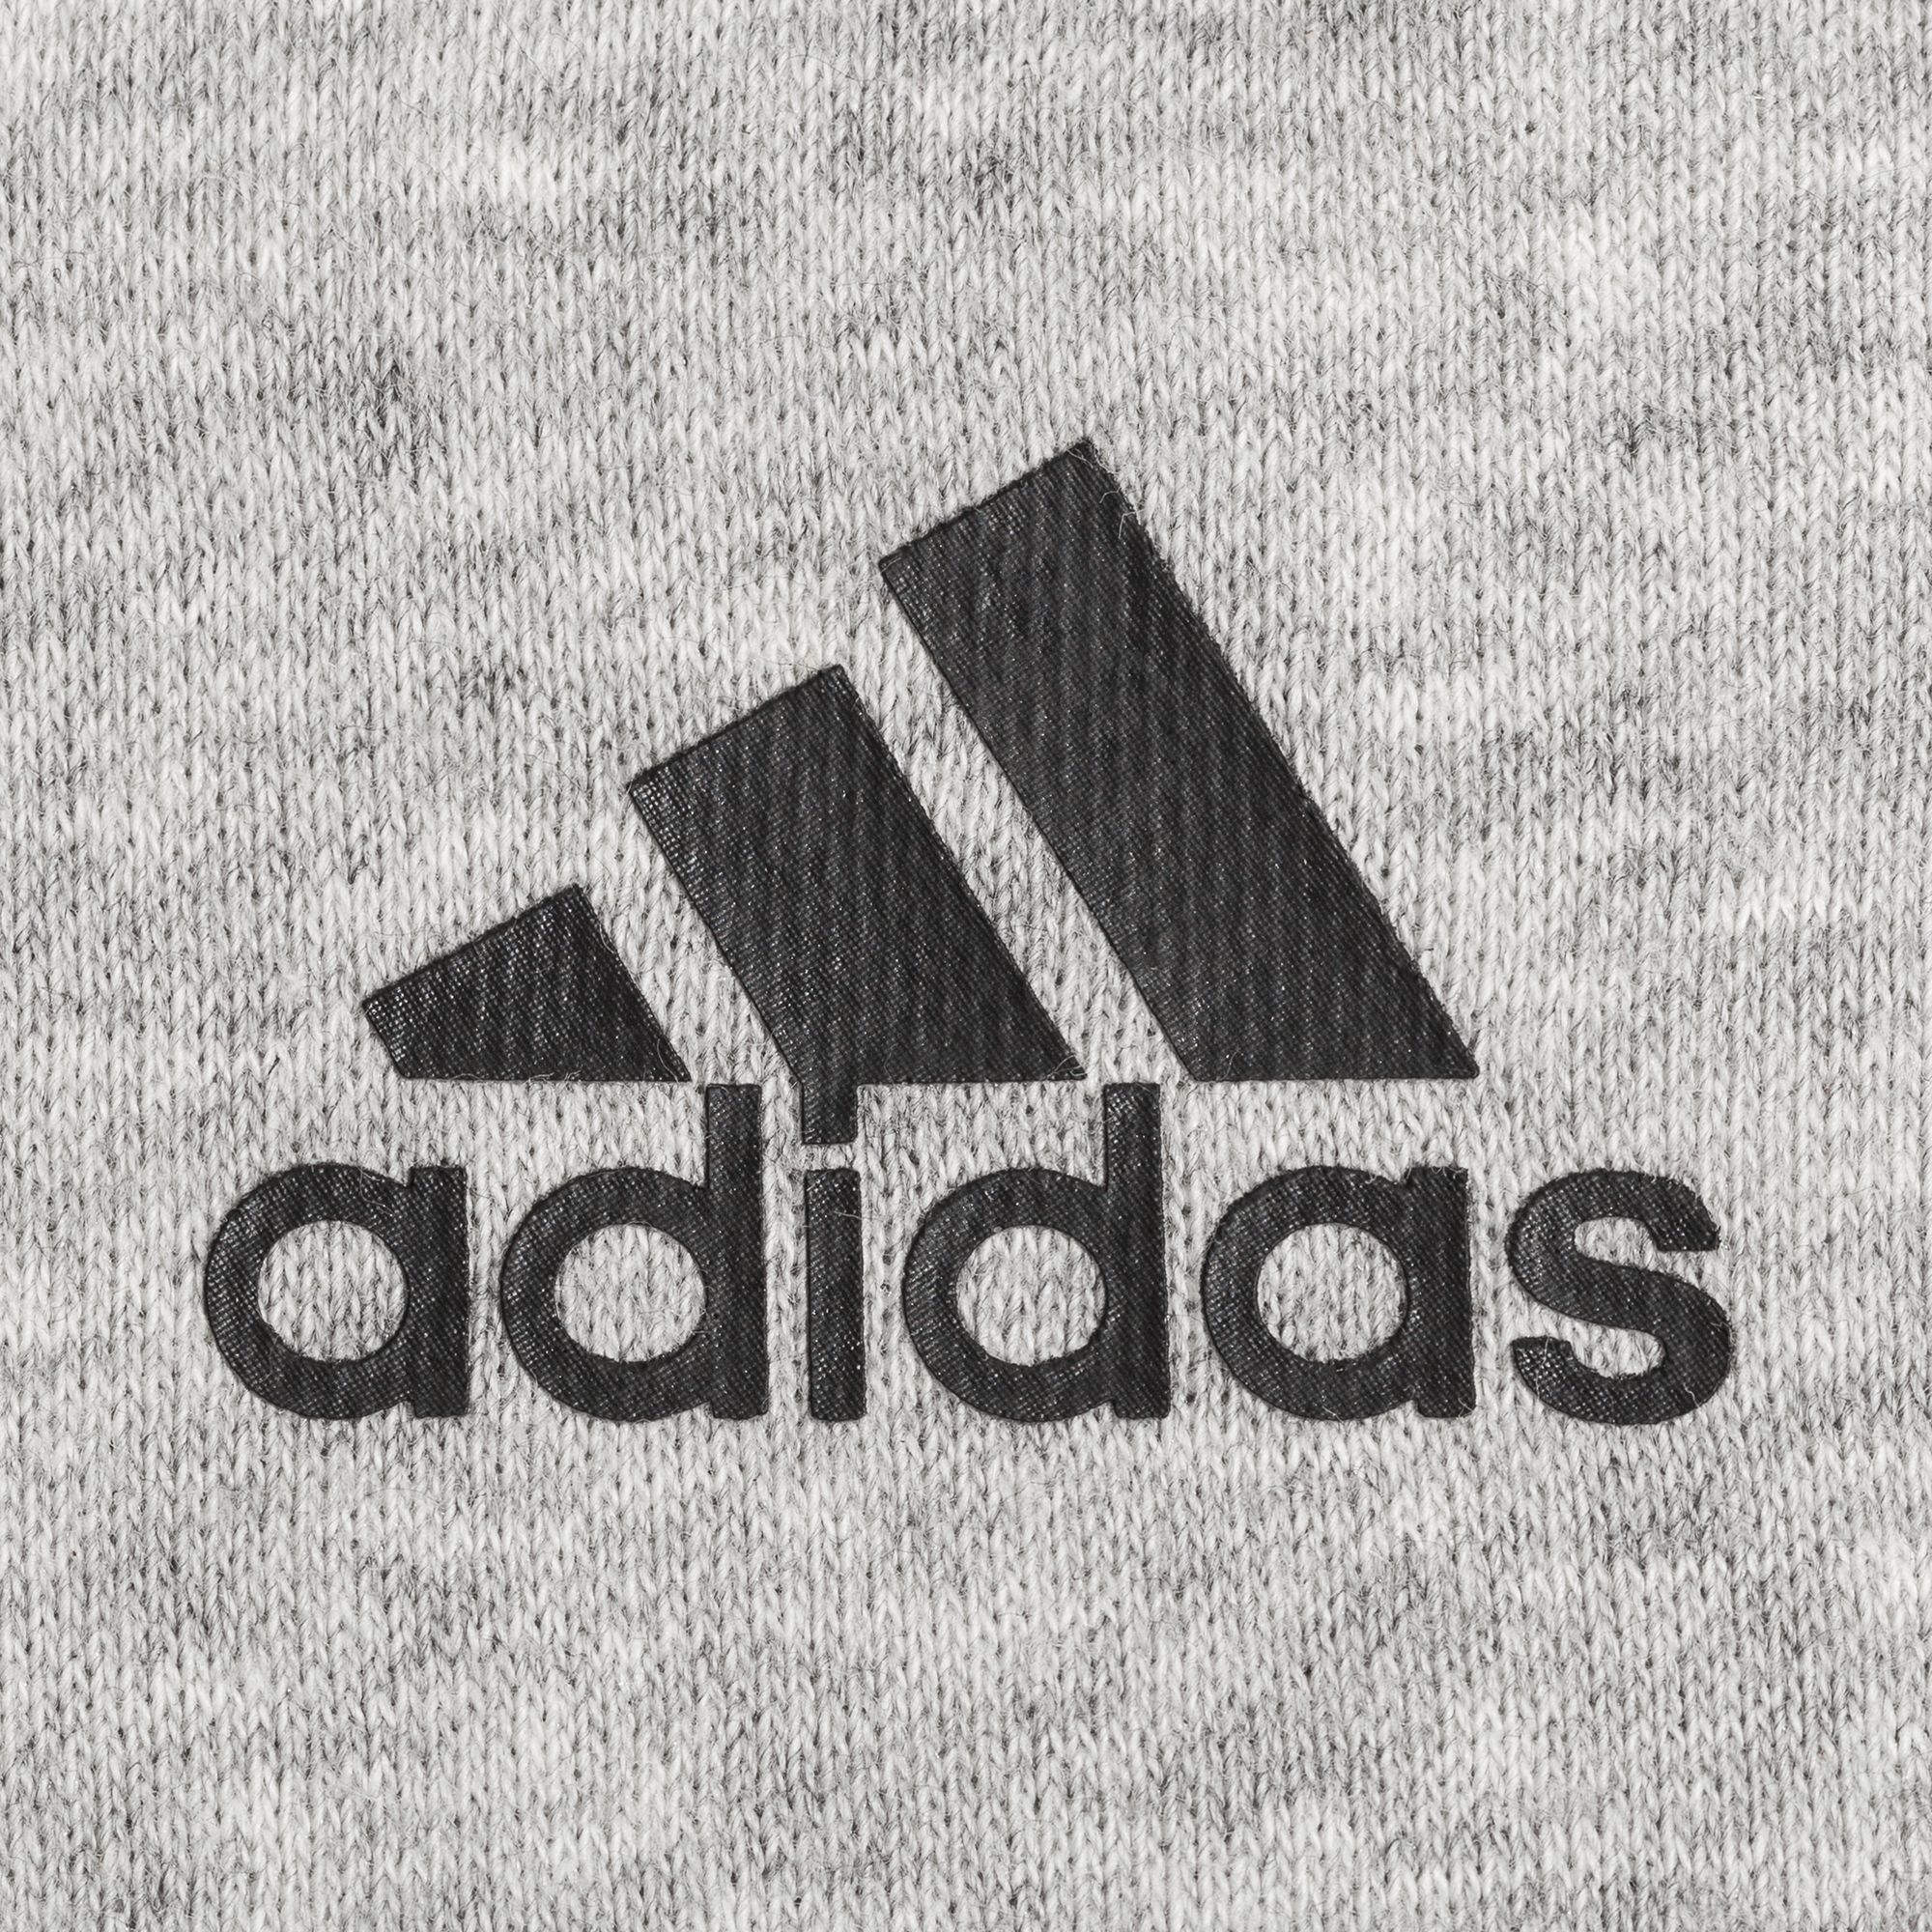 Адидас брендовый. Адидас. Фирма адидас. Adidas значок. Адидас бренд логотип.